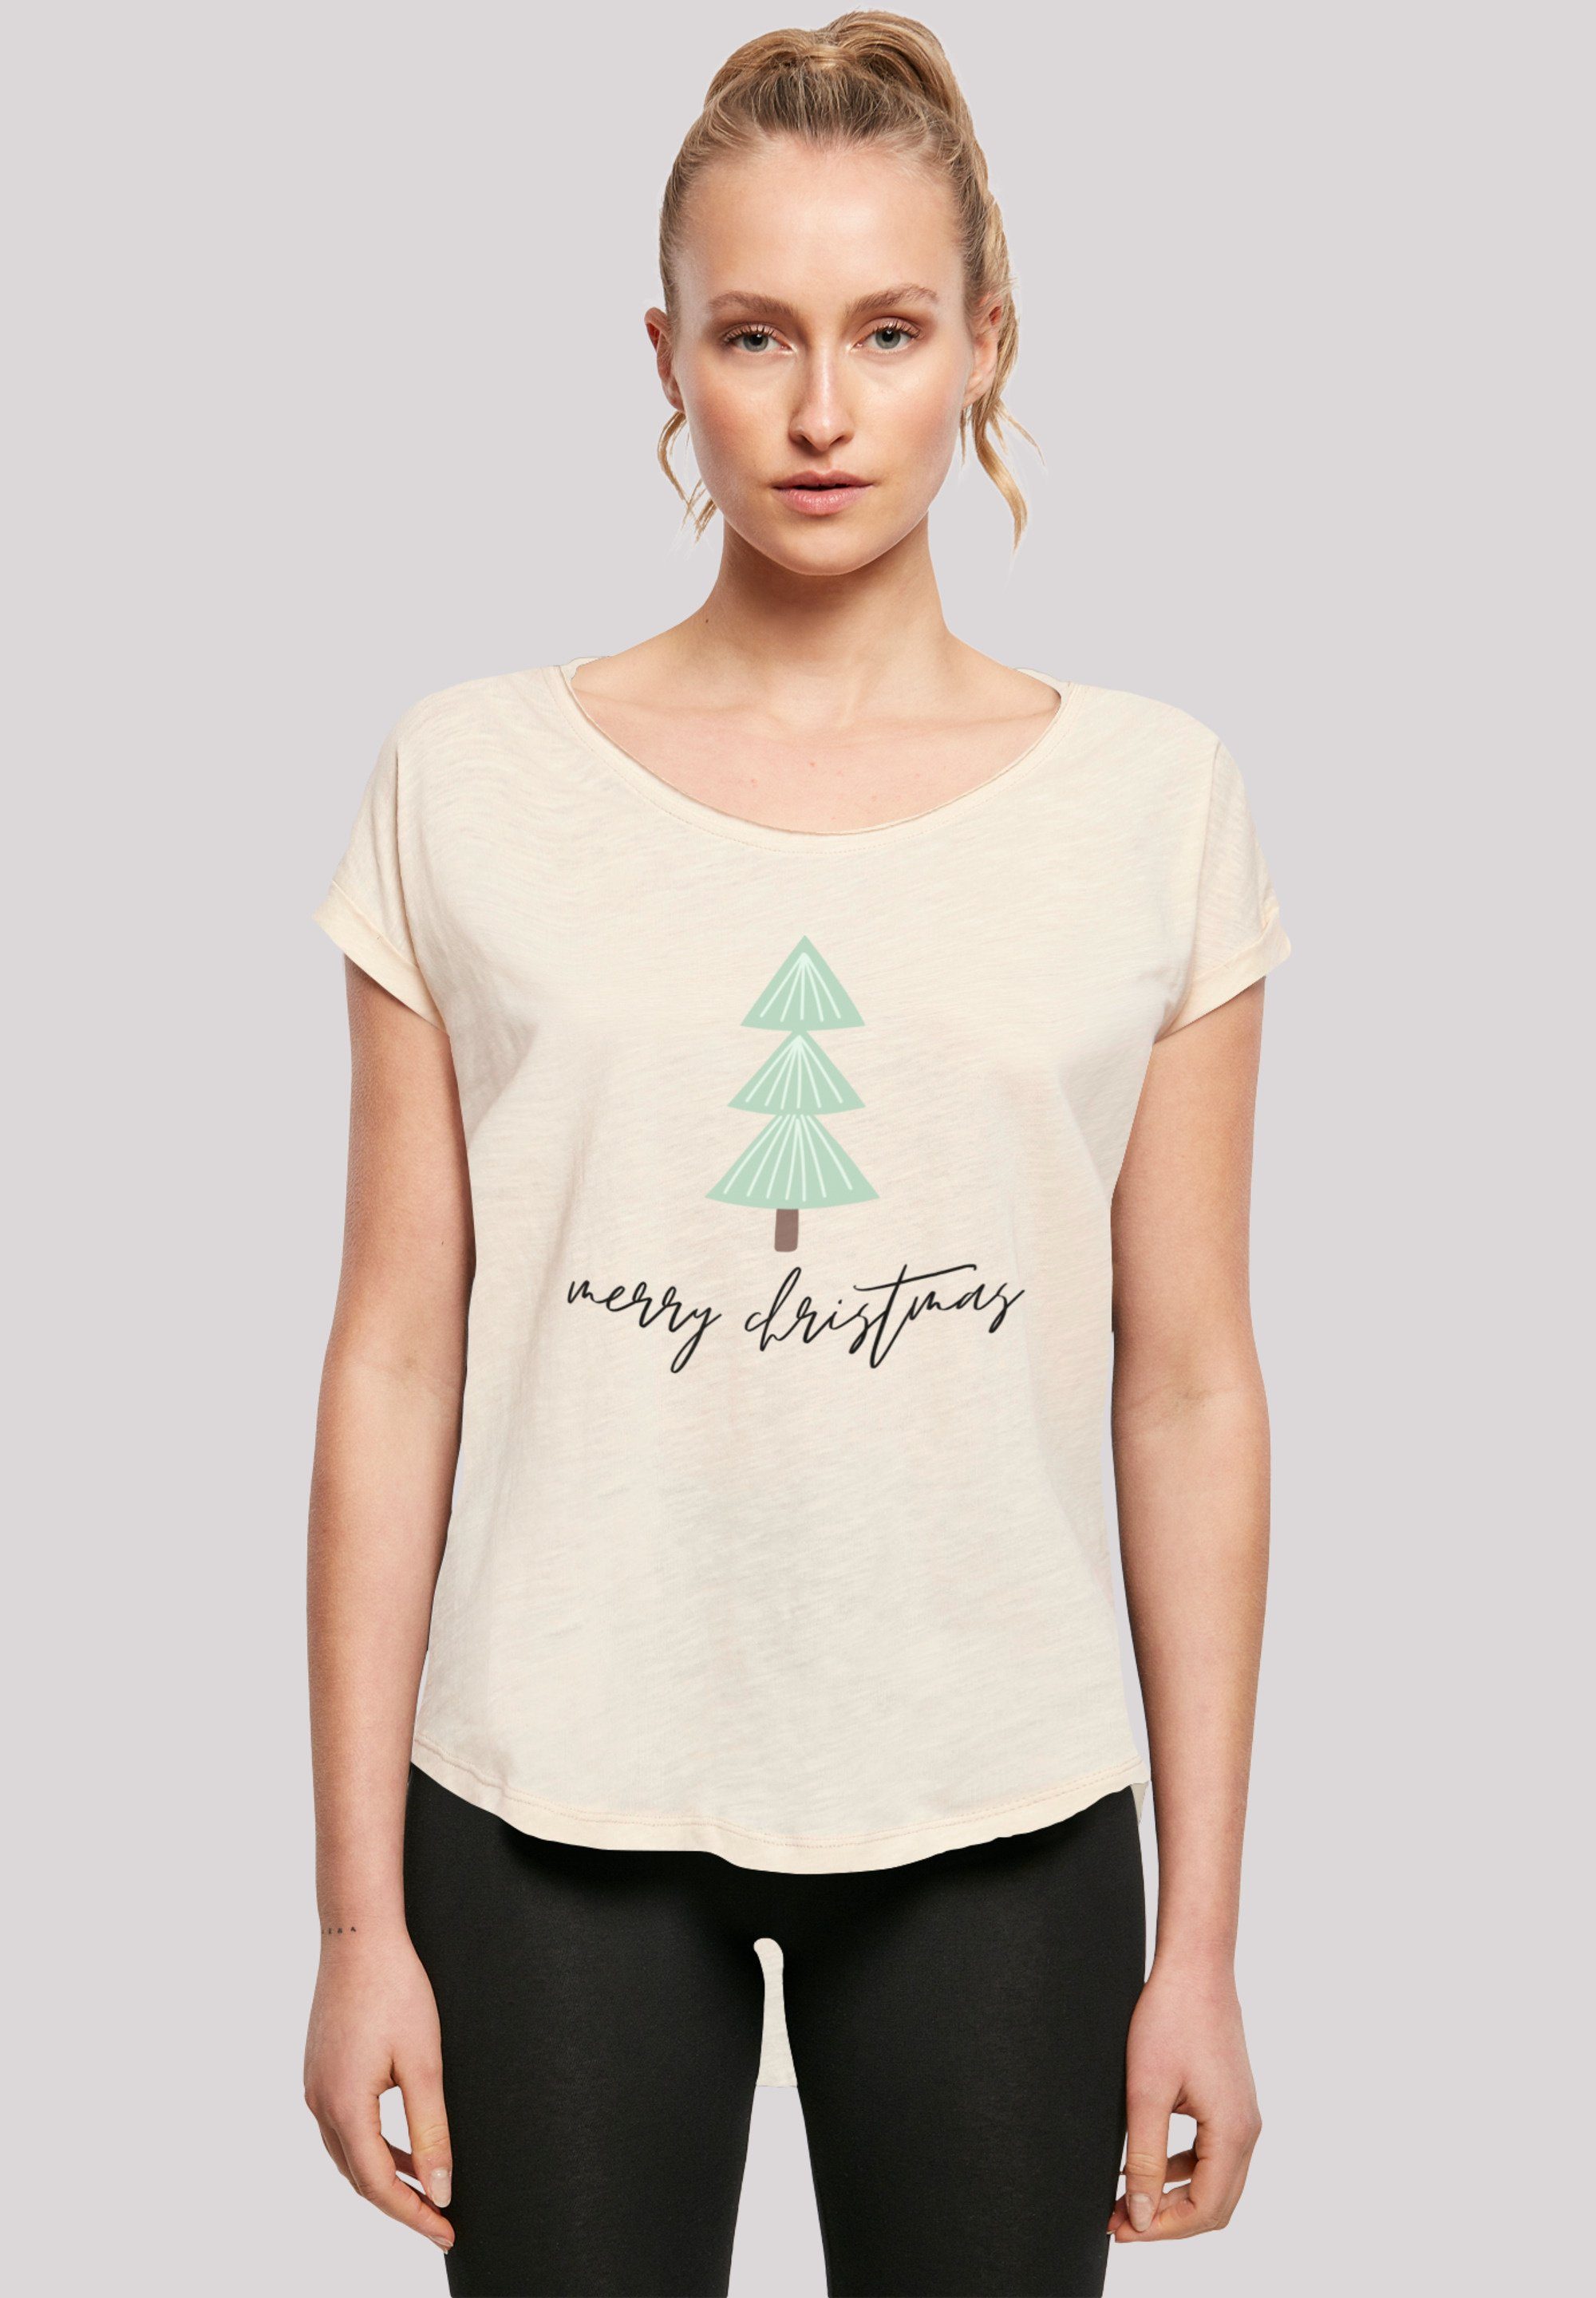 T-Shirt Print Whitesand Weihnachten F4NT4STIC Merry Christmas